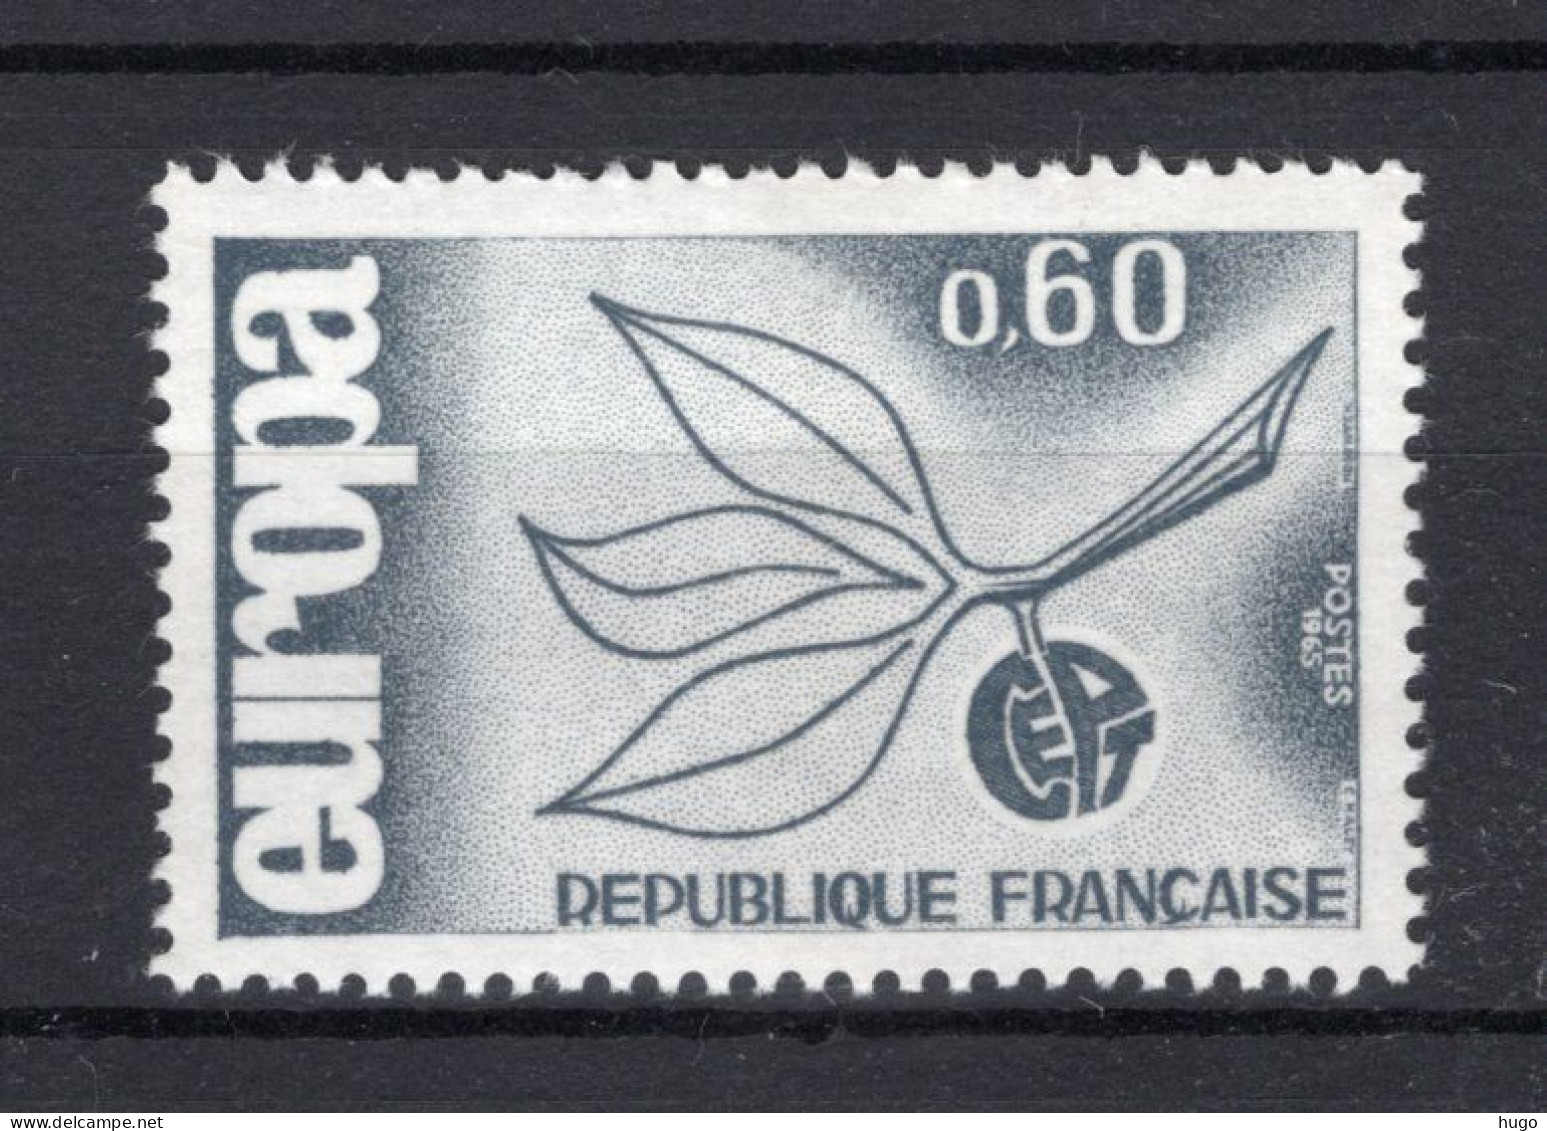 FRANKRIJK Yt. 1456 MNH 1965 - Unused Stamps